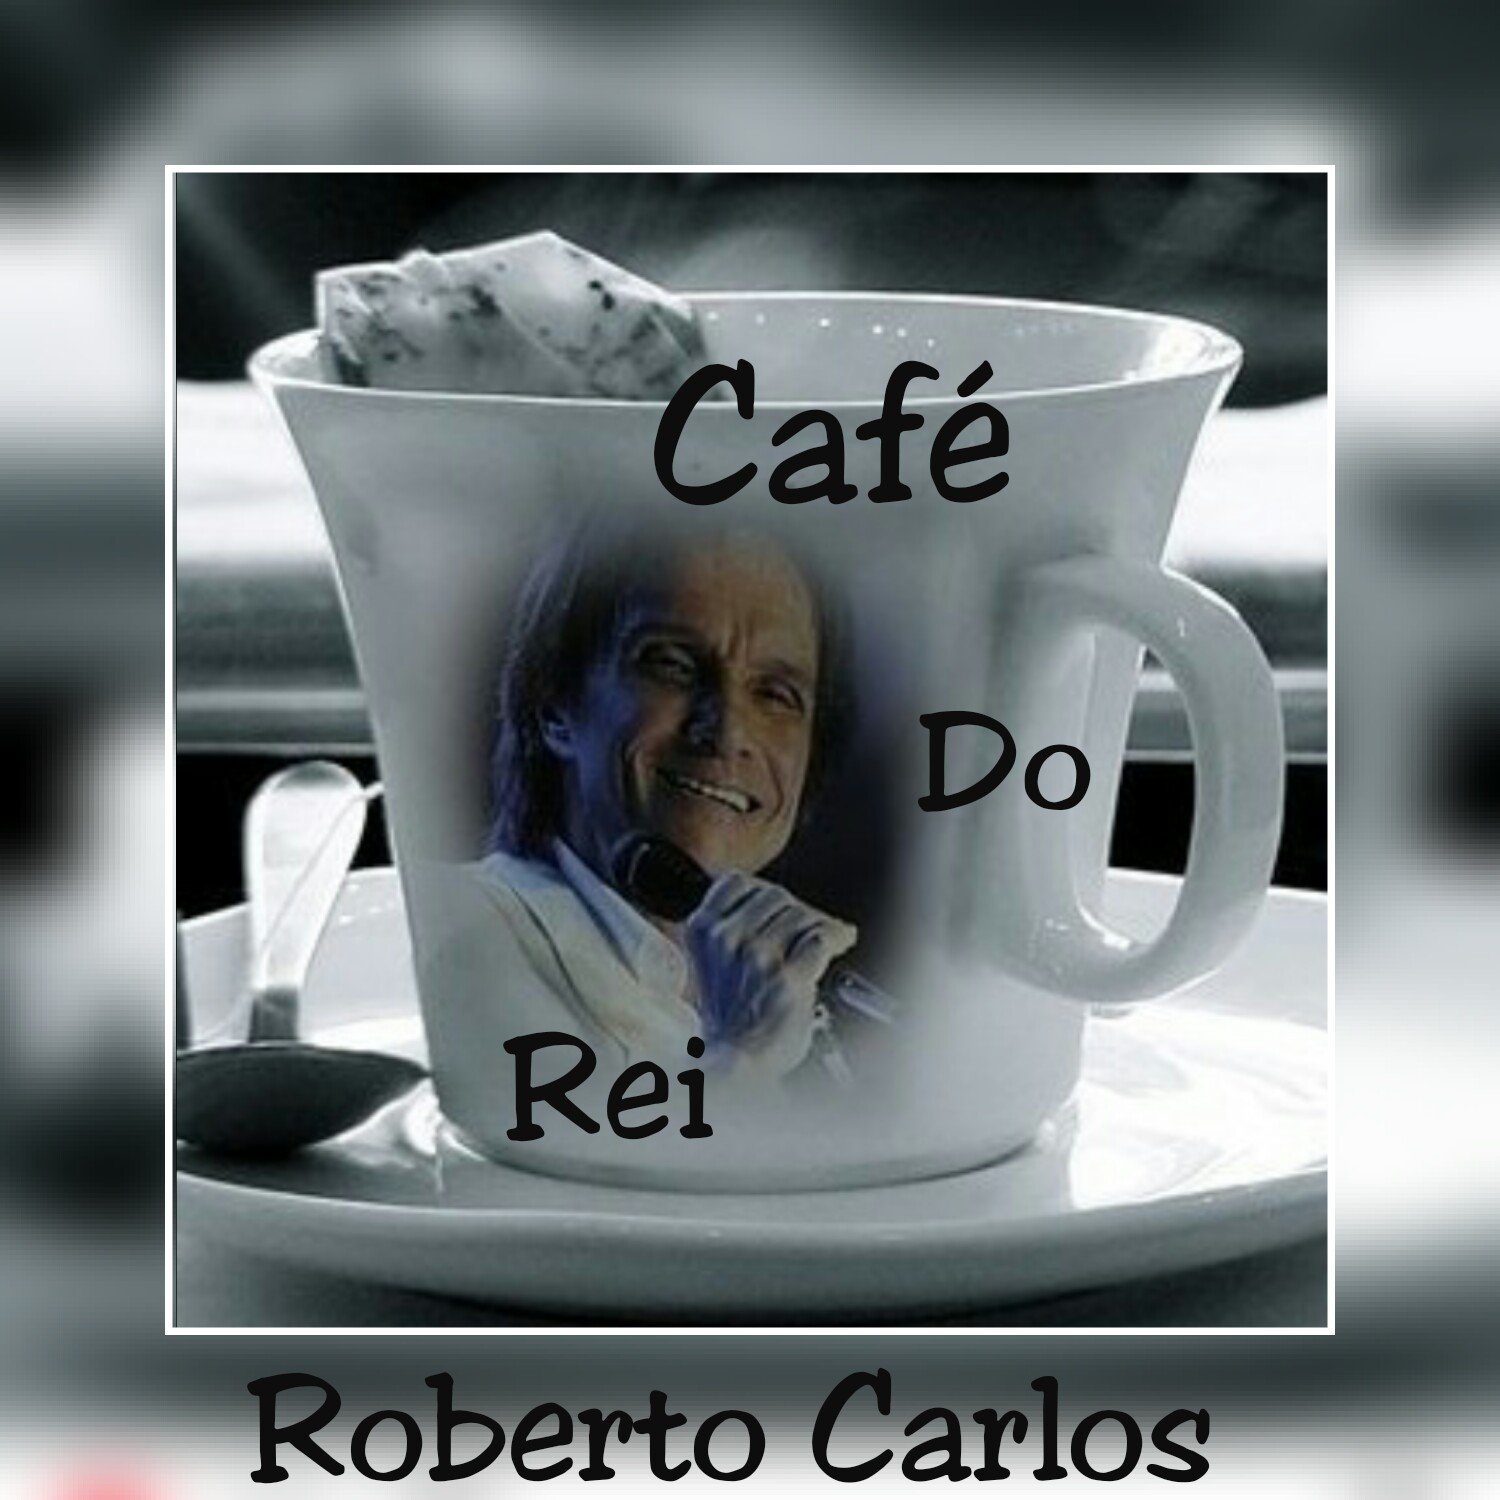 Roberto Carlos on Twitter: 